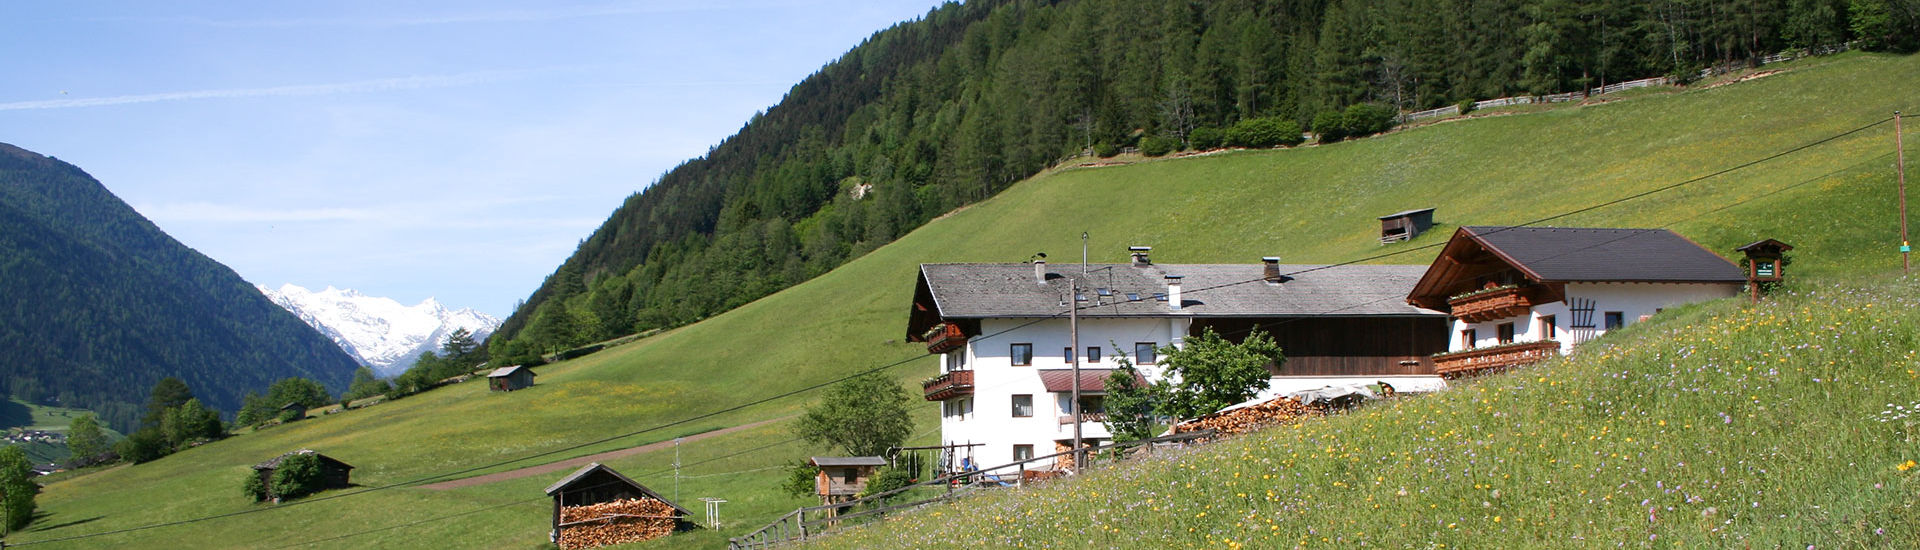 Impressionen, Omesberger Hof in Neustift - Urlaub im Stubaital in Tirol